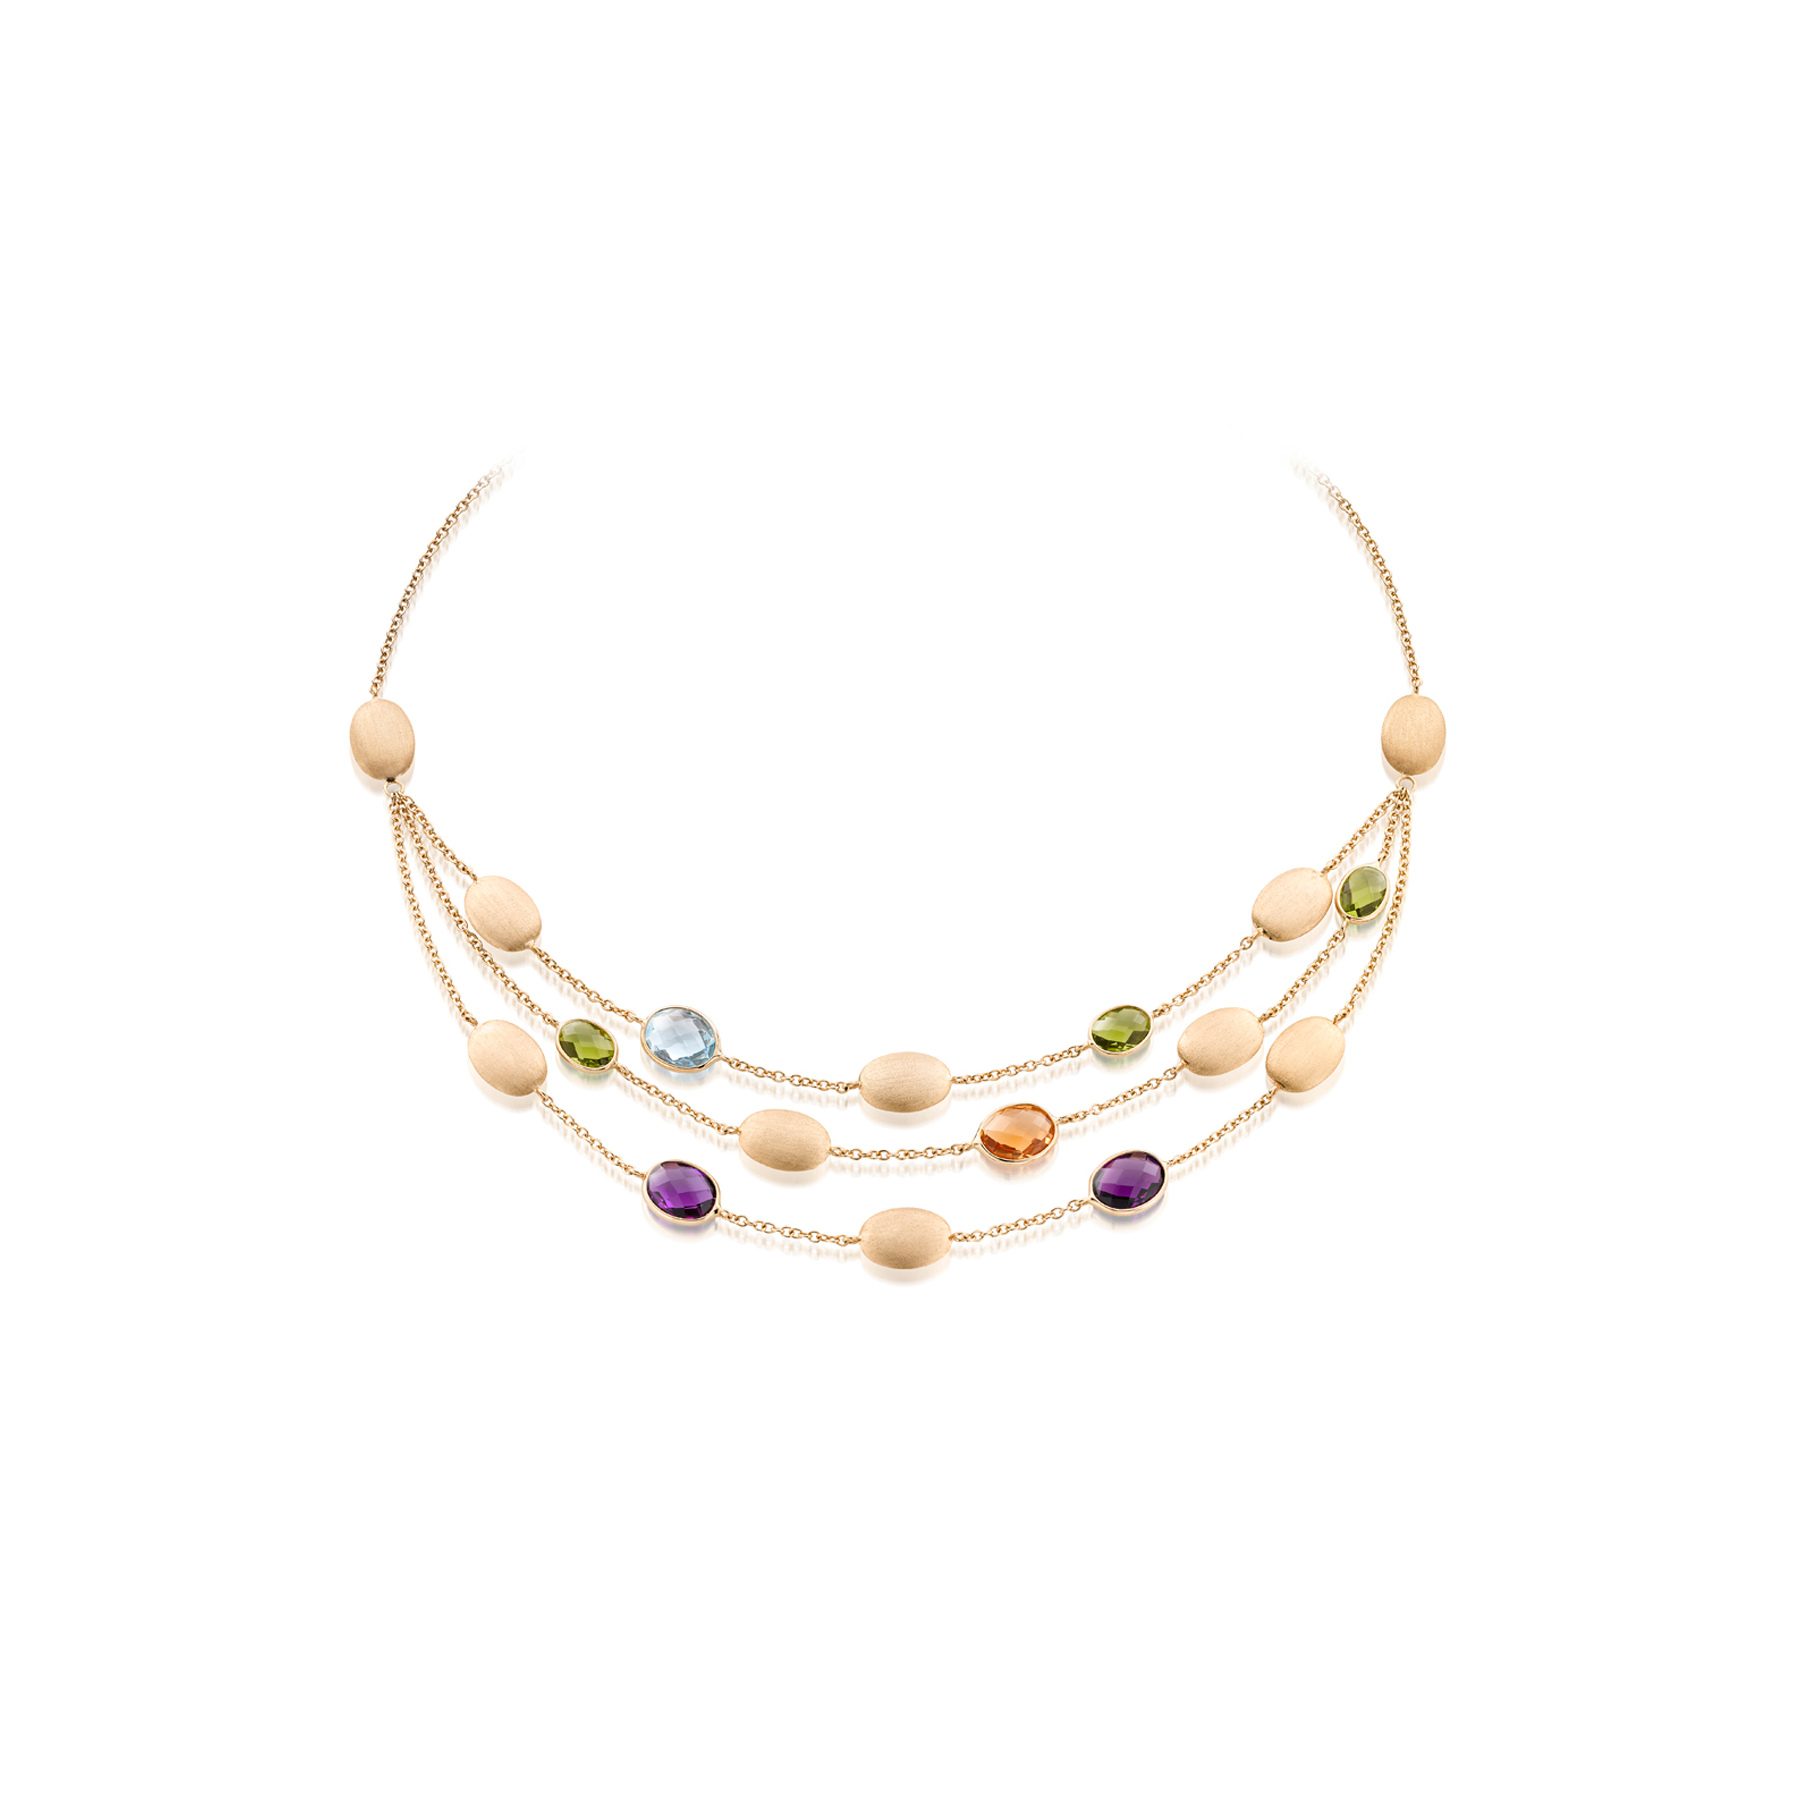 Three strand multi-gemstone necklace